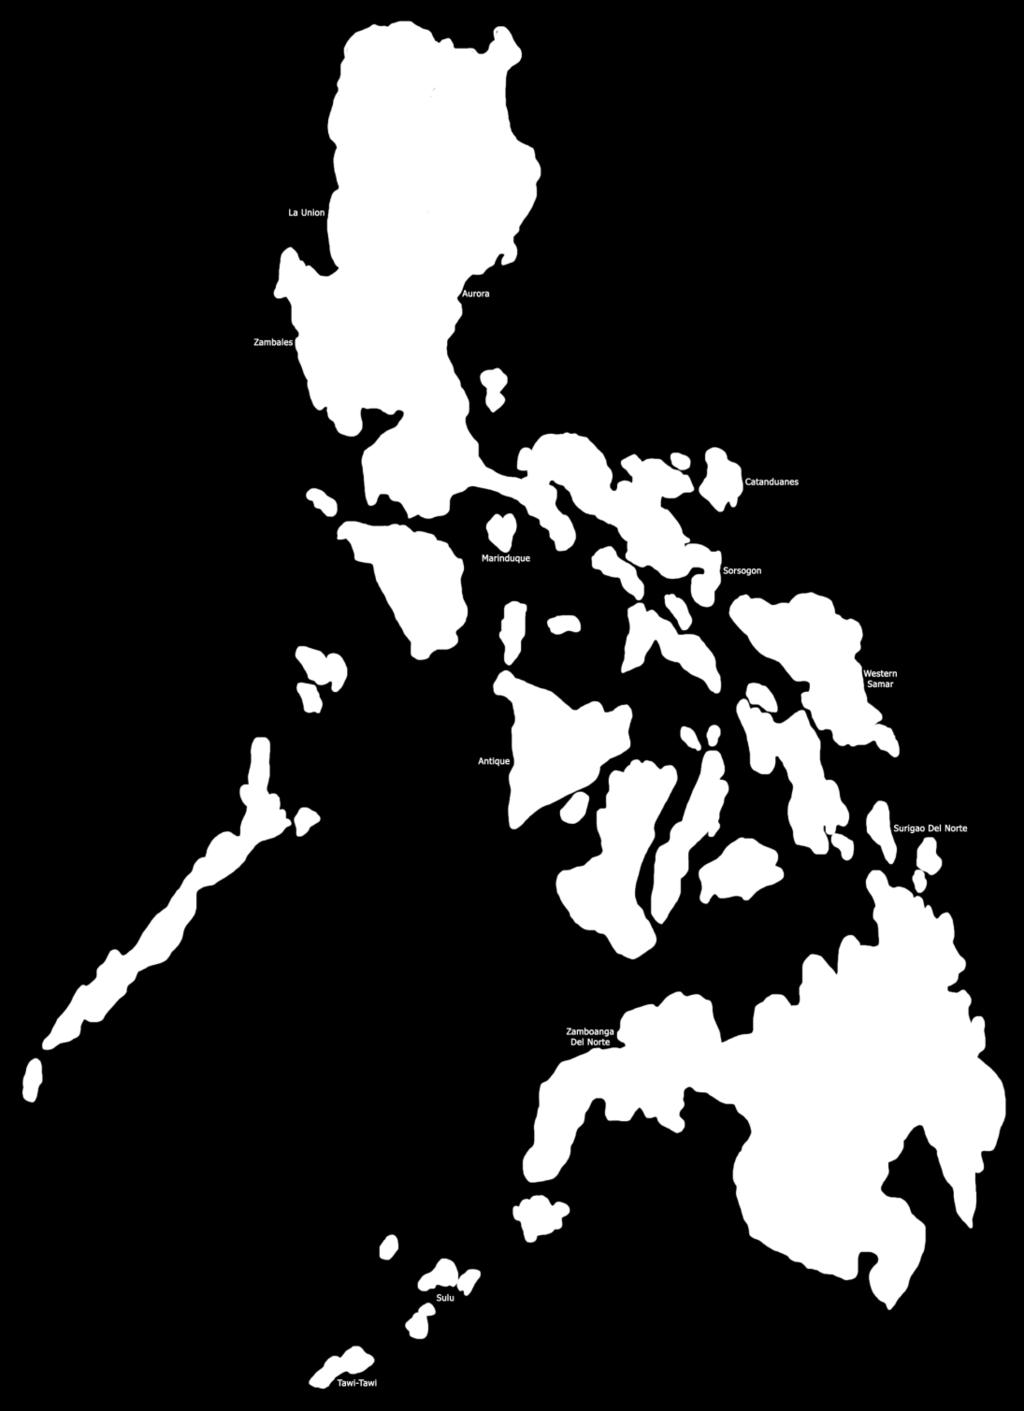 Bedaquiline in the Philippines REgion No. /% Study sites NCR 53(47%) LCP, JJRMH( tala), Batasan PTSI tayuman/qi,santolan, Tumana, Tunasan,EAMC, Region 1 2 (2%) ITRMC in La Union Region 3 4 (3.